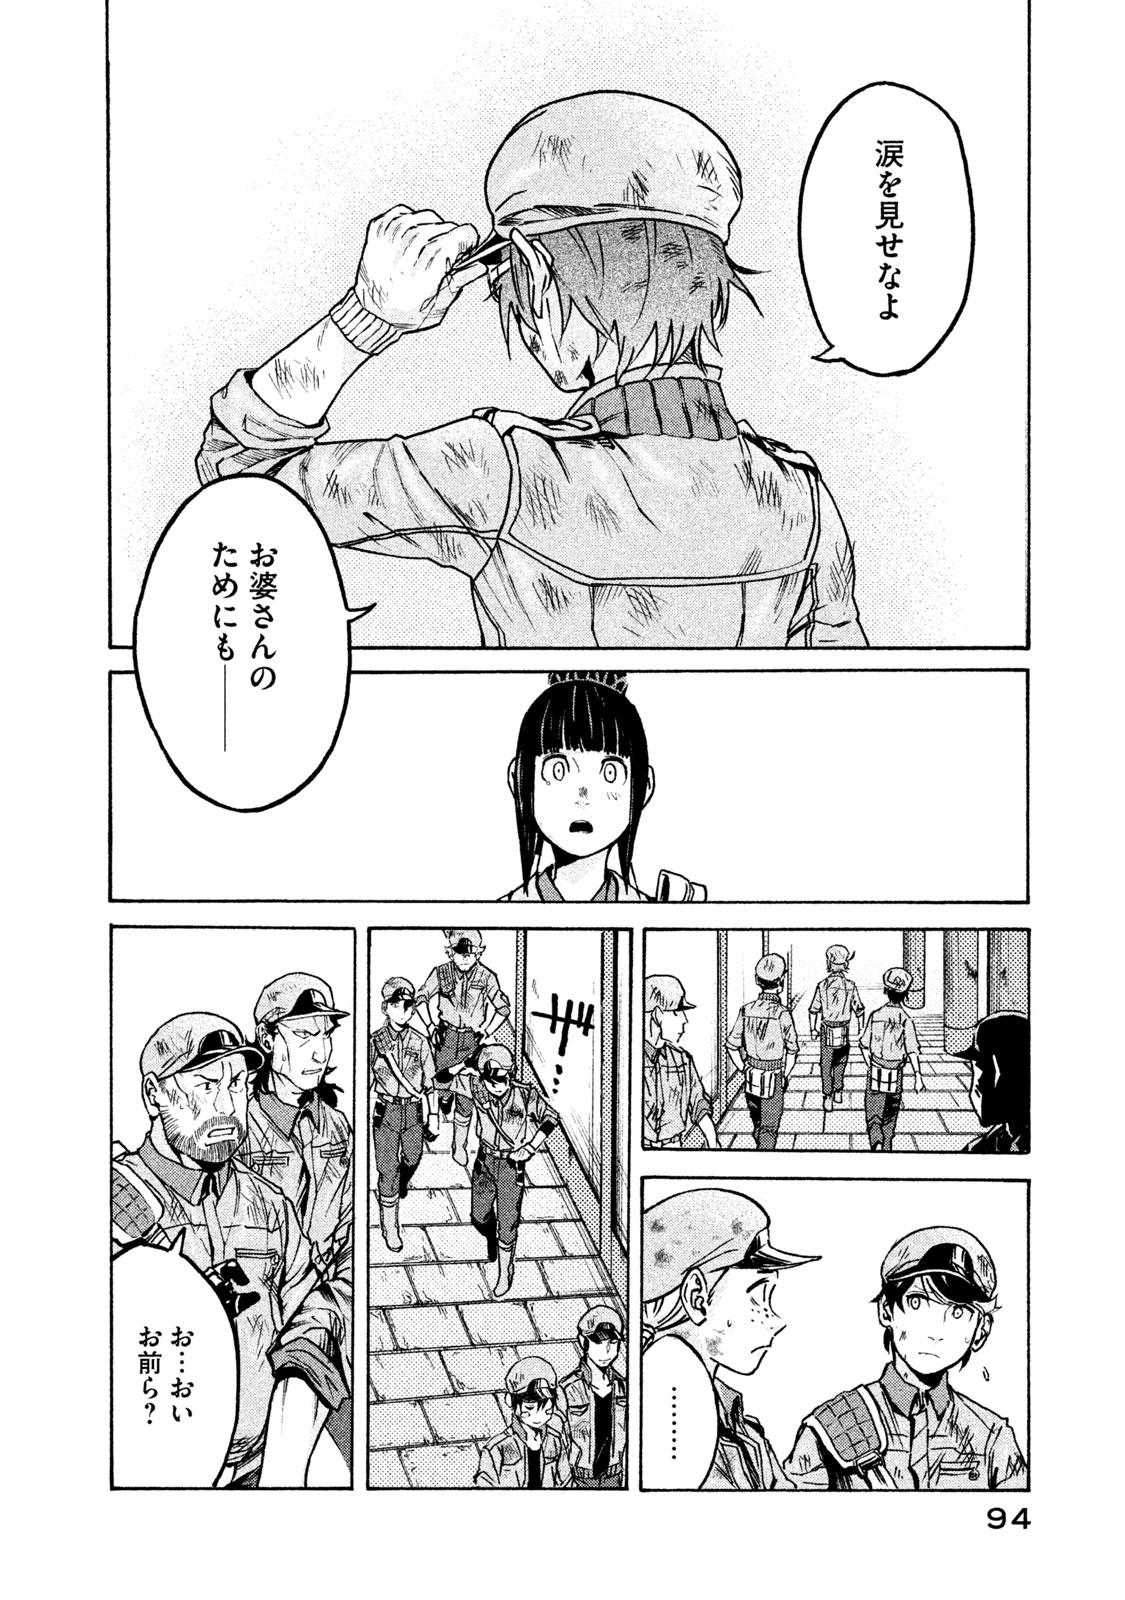 Hataraku Saibou BLACK - Chapter 14 - Page 18